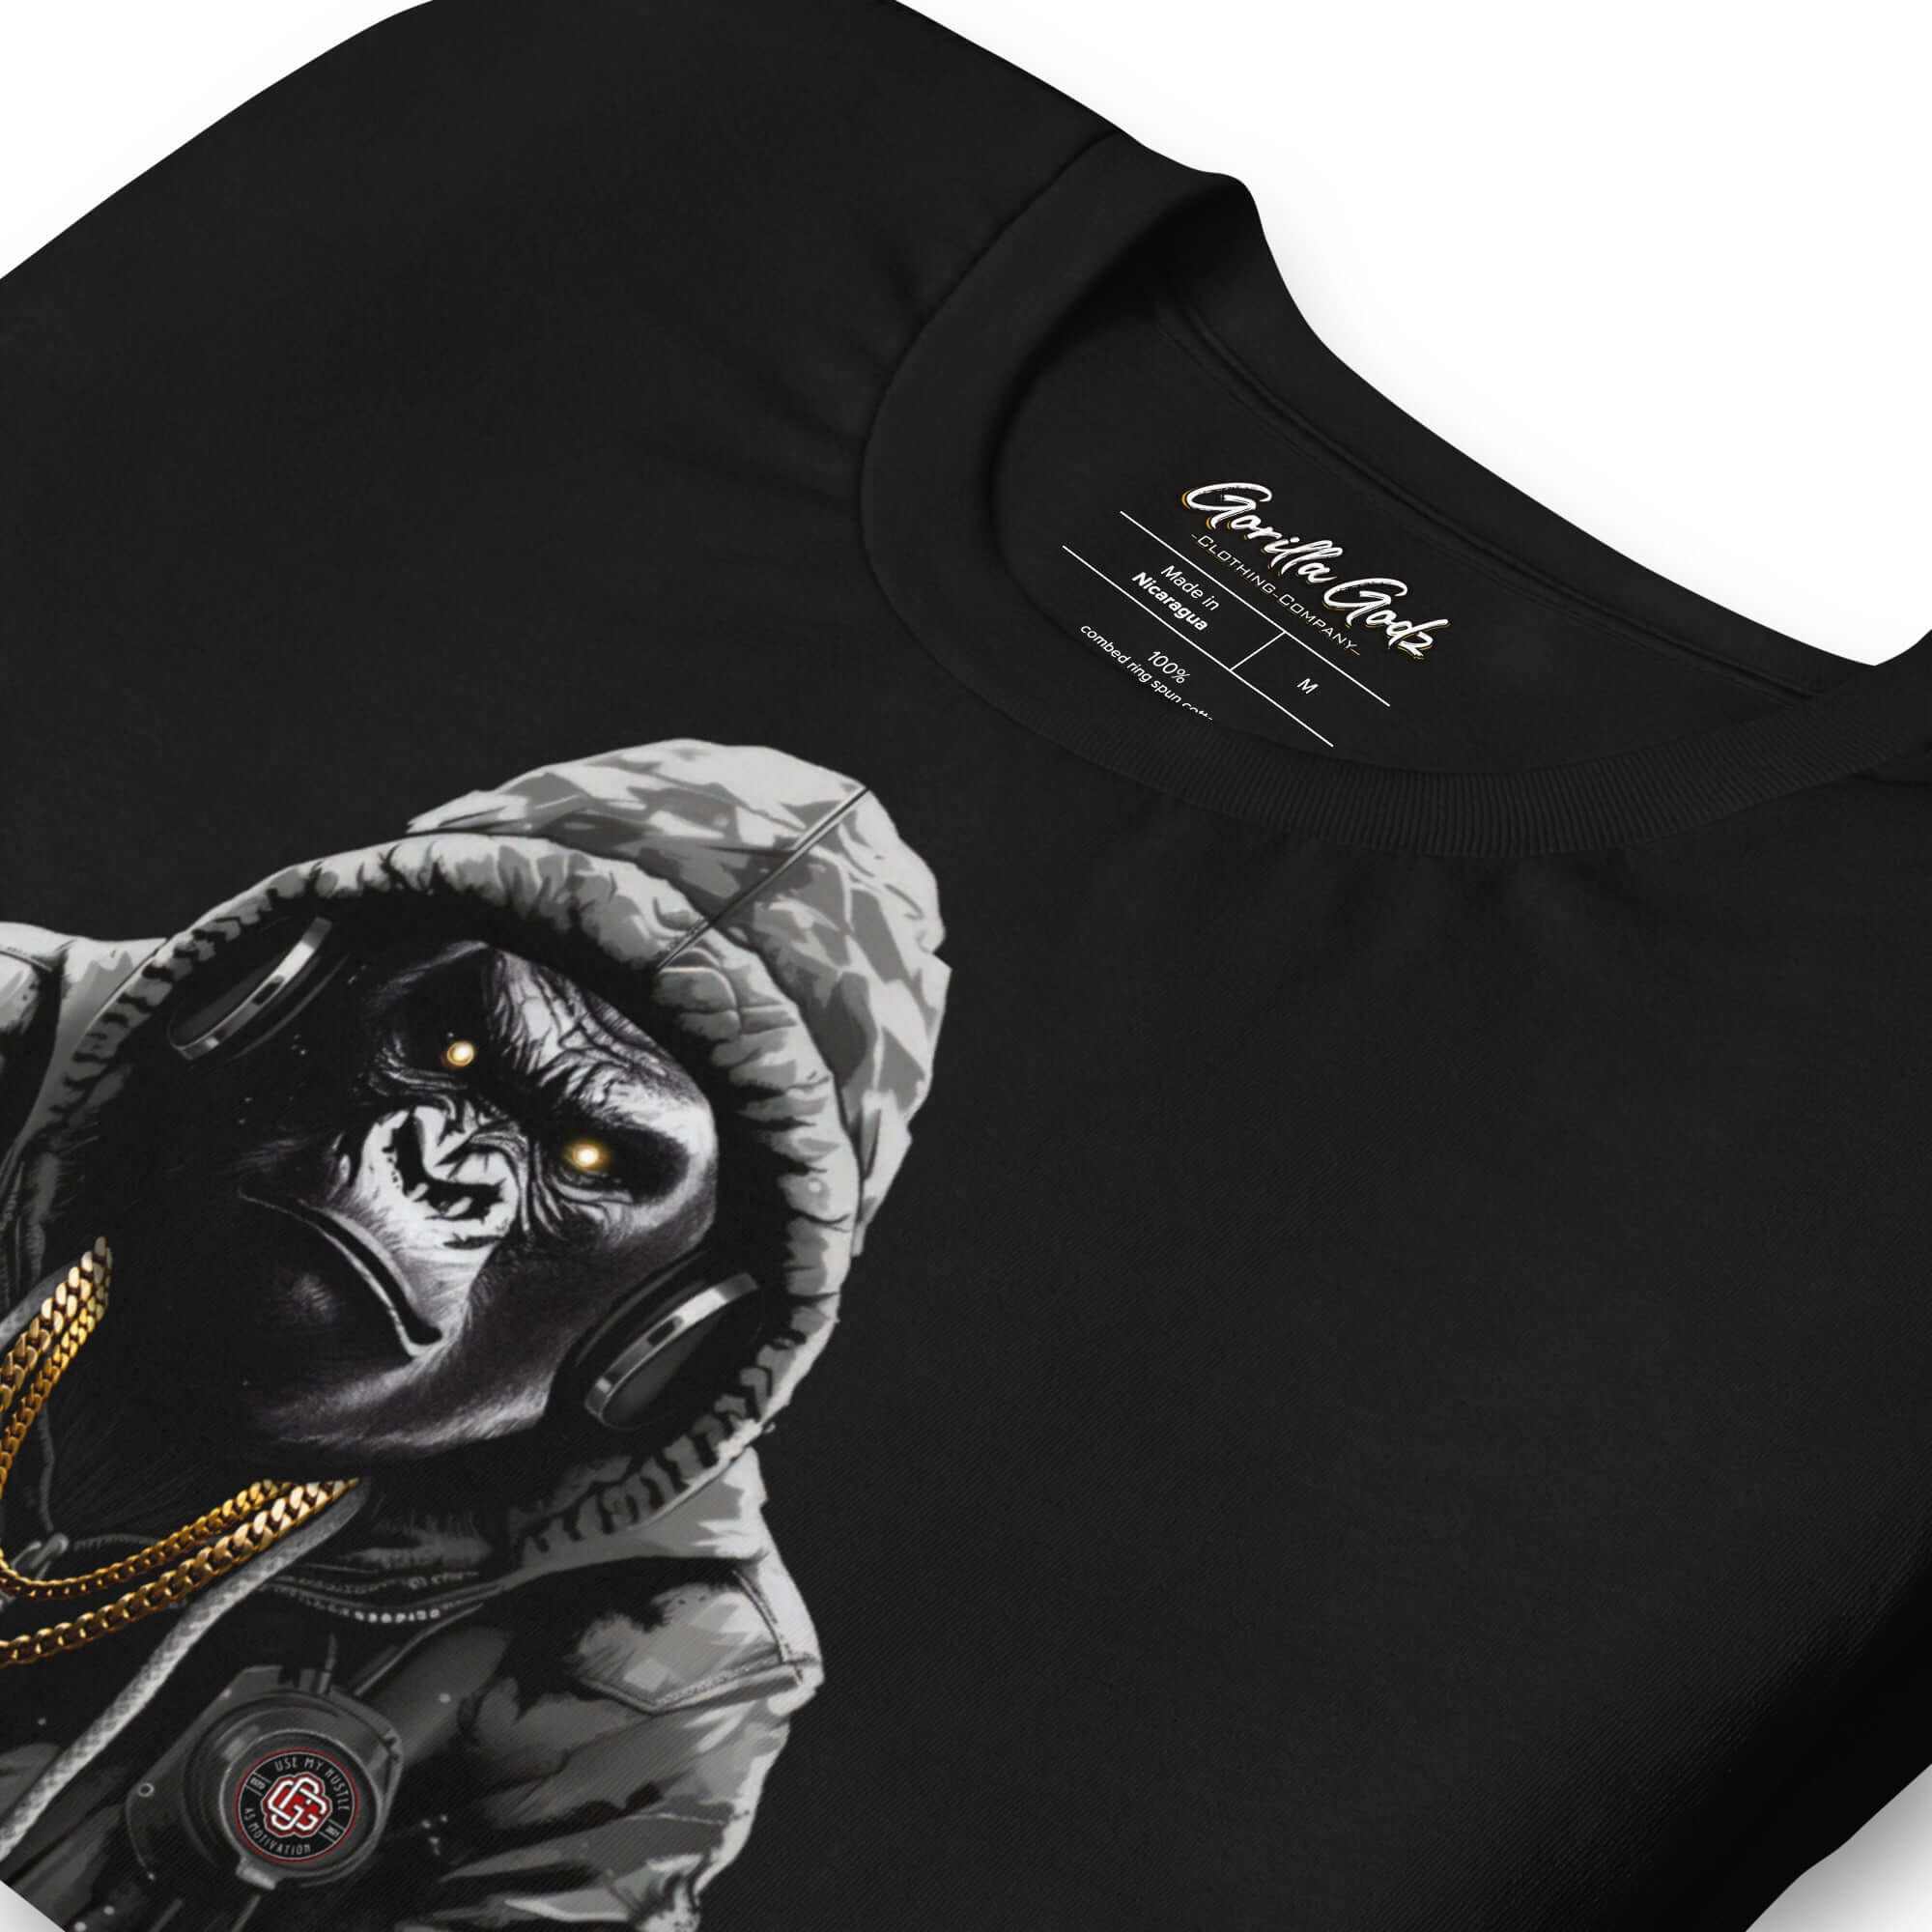 Gorilla Godz Unisex T-shirt (Color options available)